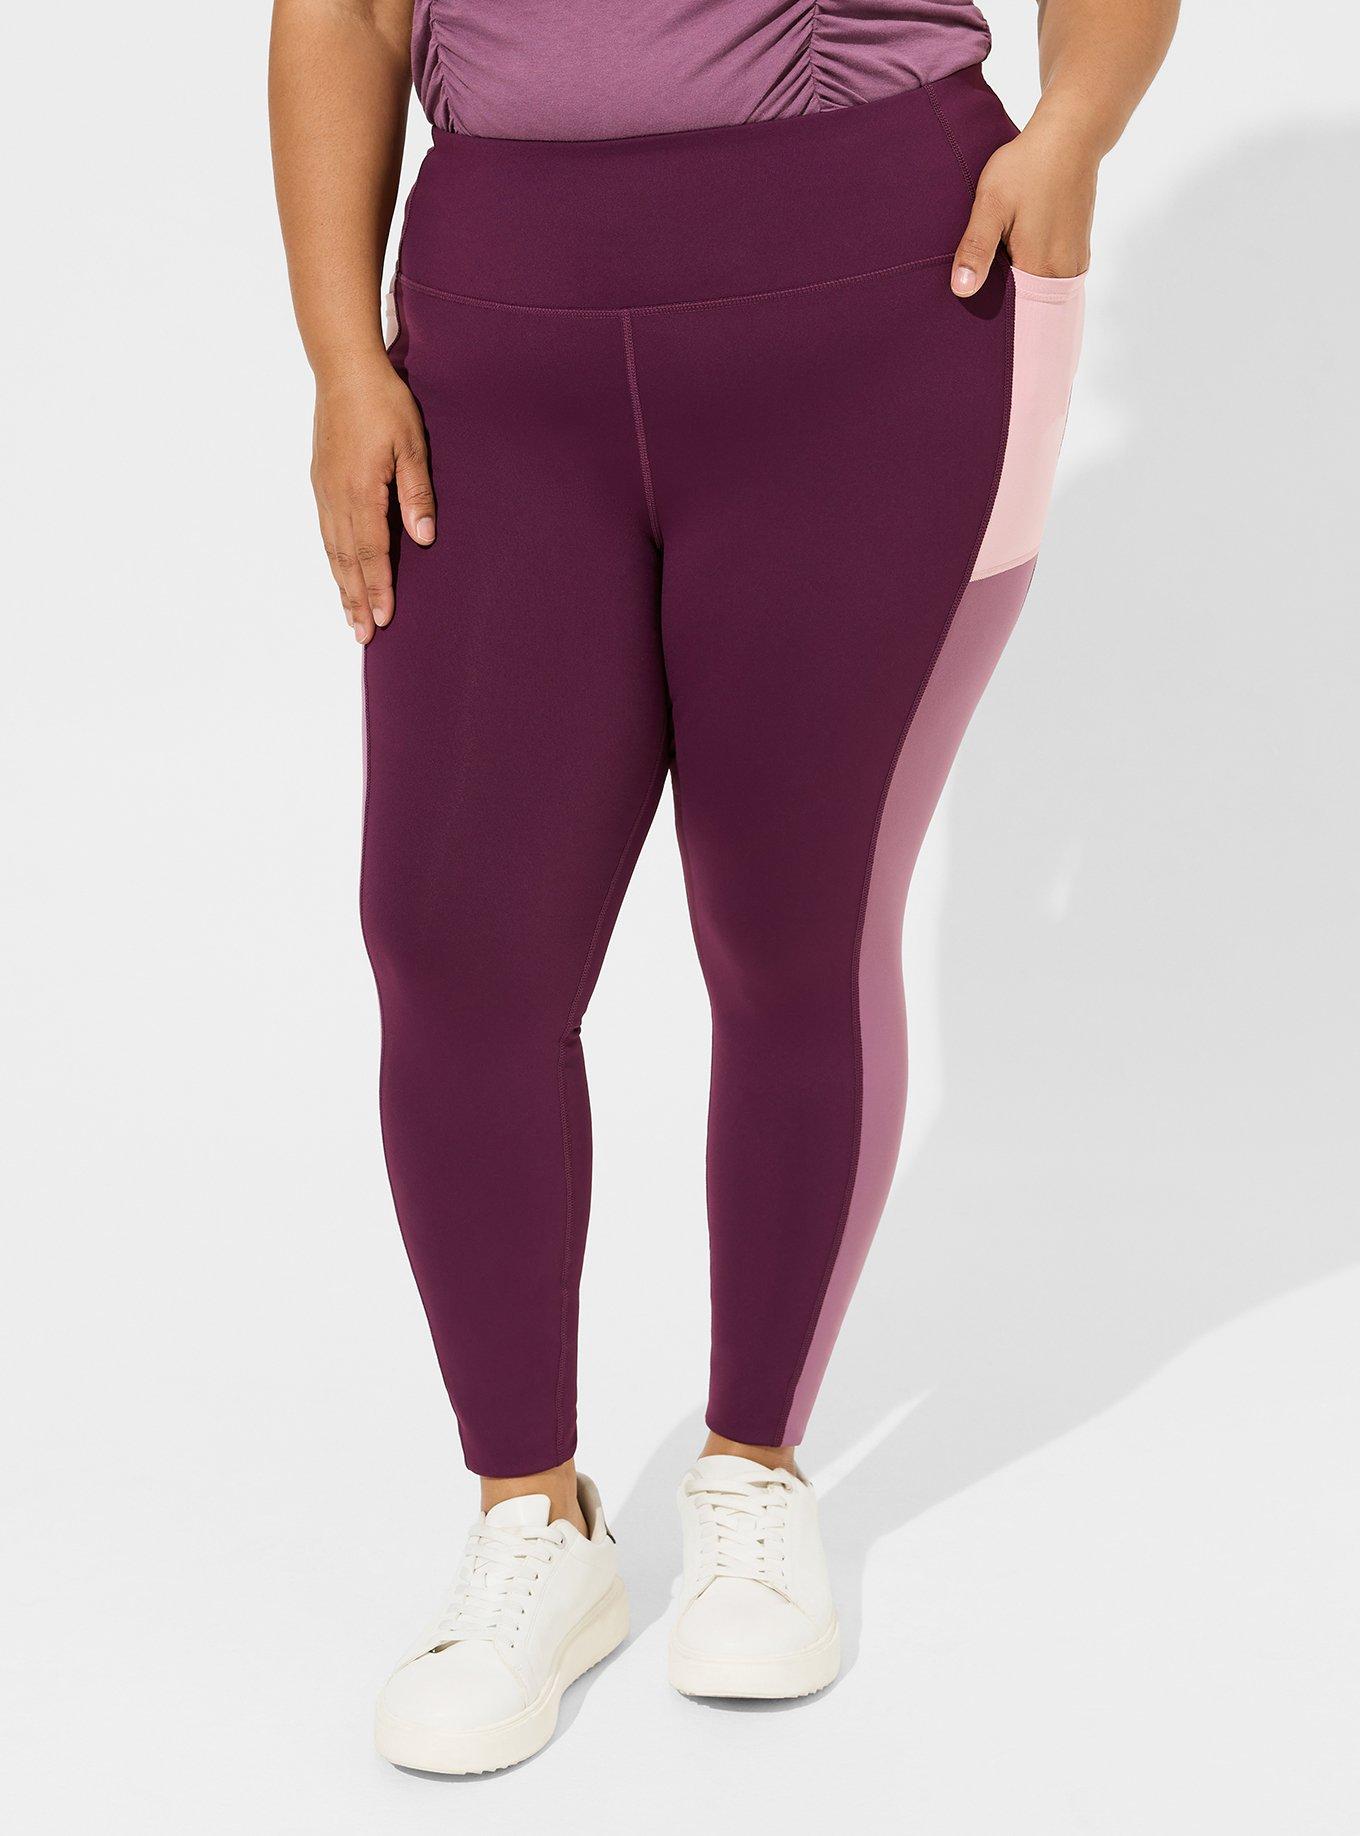 Torrid Marled Burgundy Yoga Pants Size 3X Plus (3) (Plus) - 66